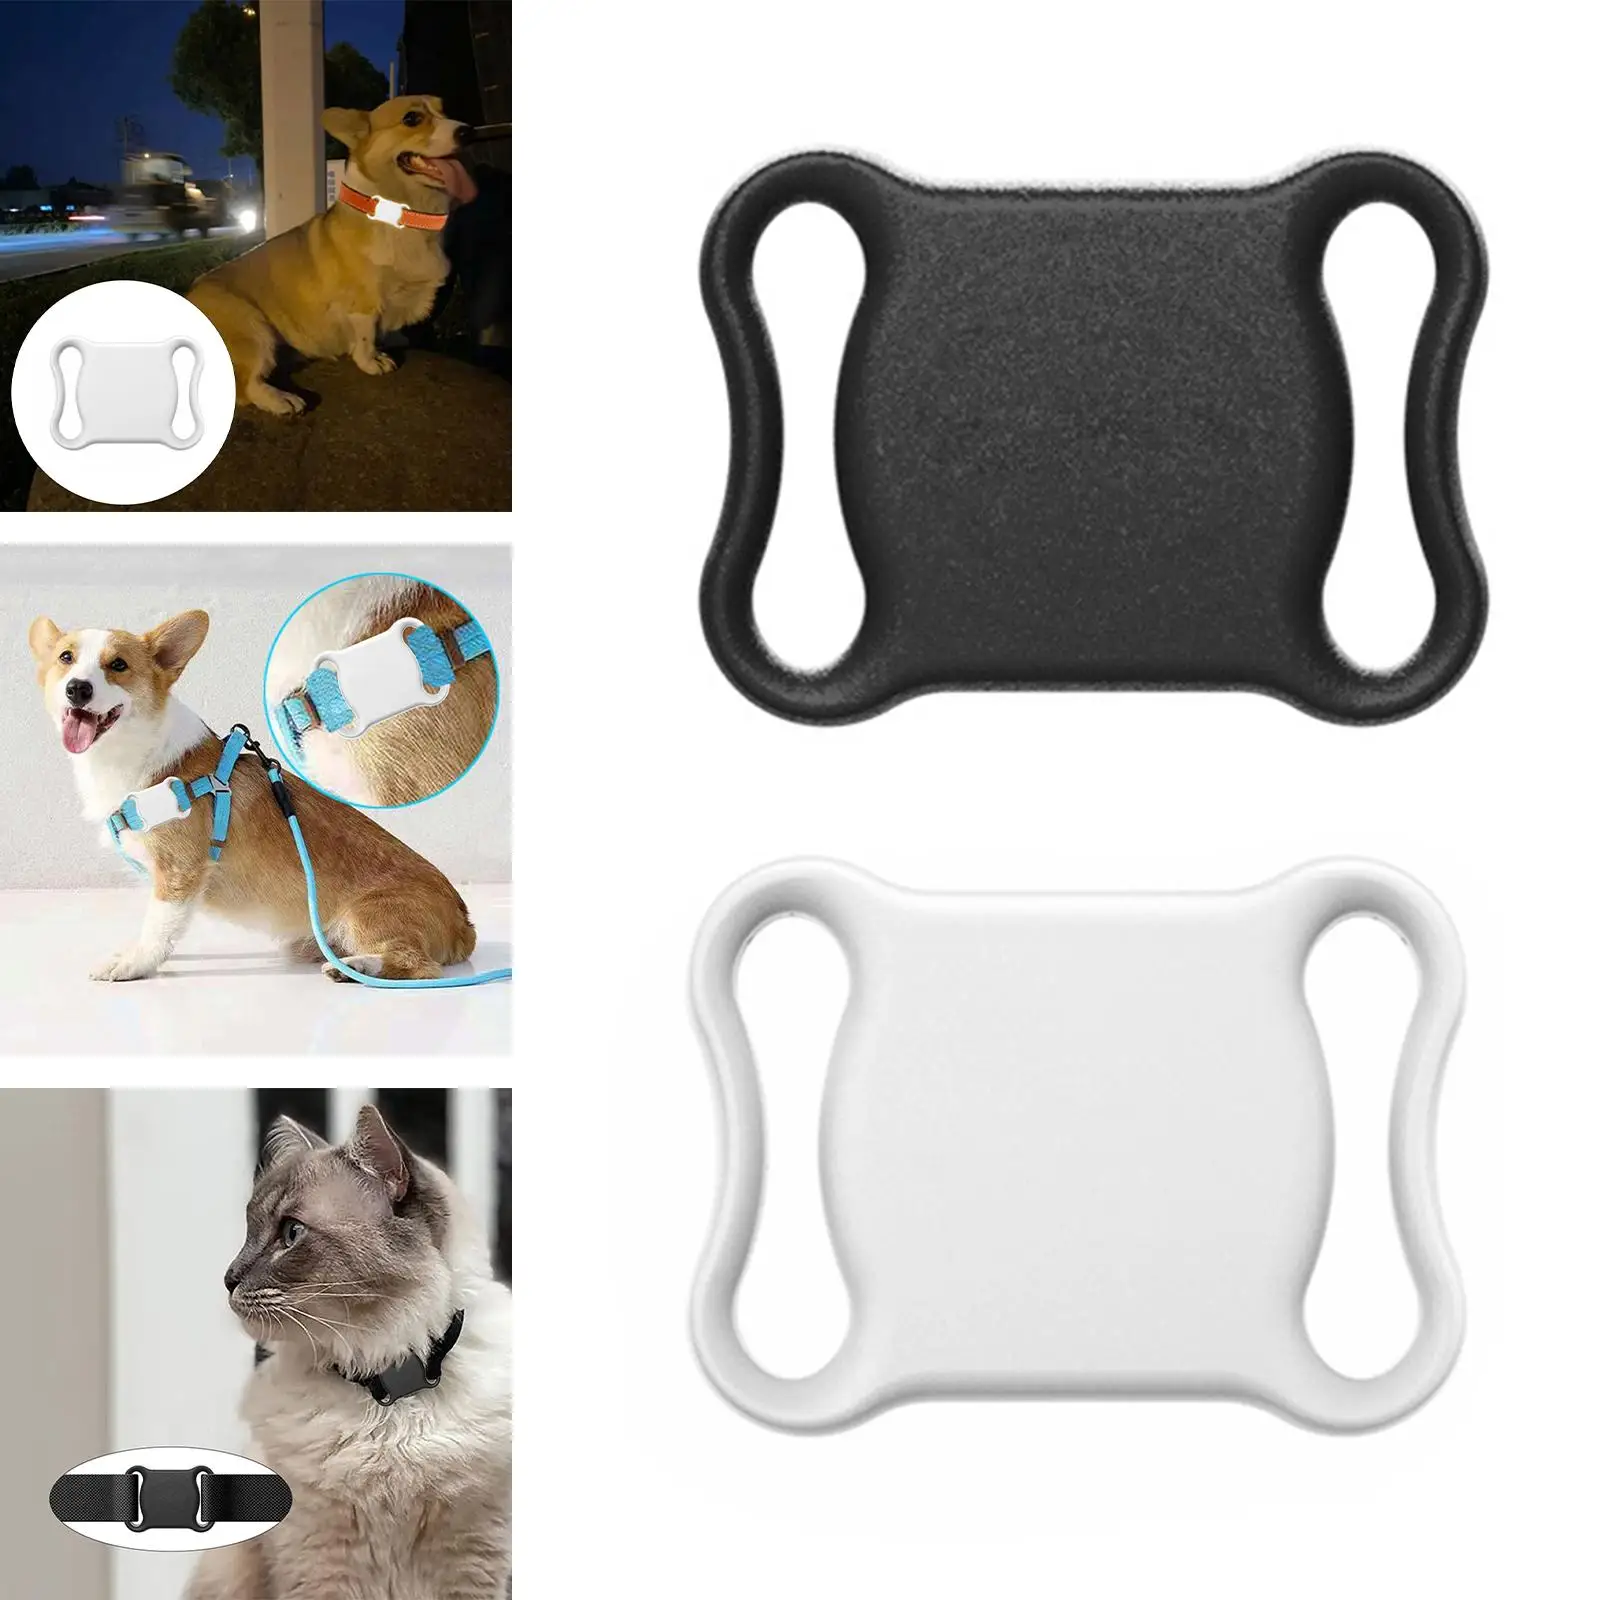 GPS Pet Tracker Built in Night Light IP65 Waterproof Dog Locator Bluetooth Locator Tracer Activity Monitor for Cats Pets Kids